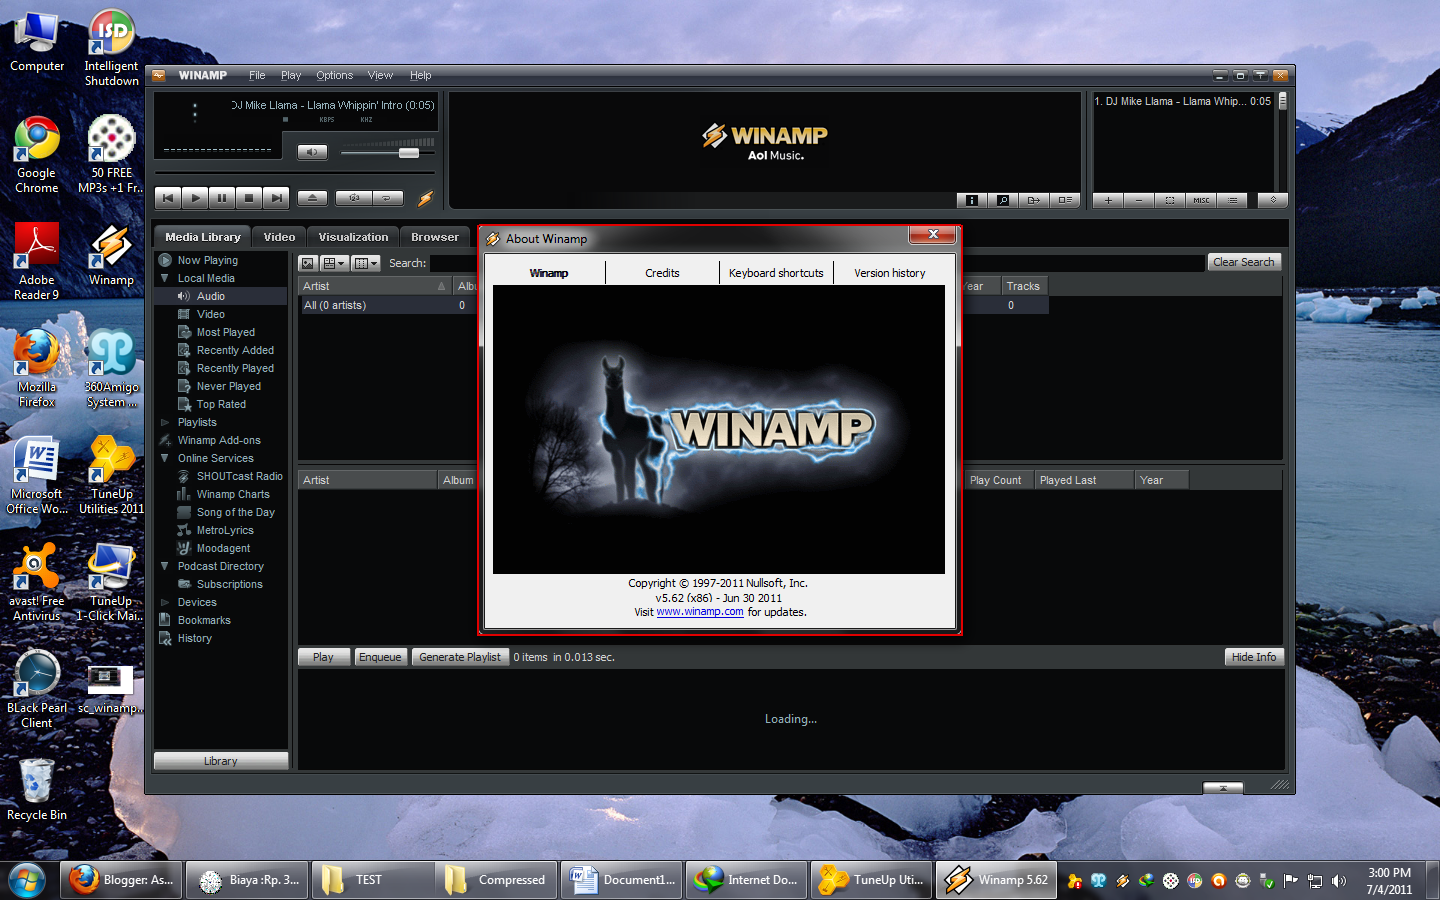 Winamp pro ver5.62 build 3161 final